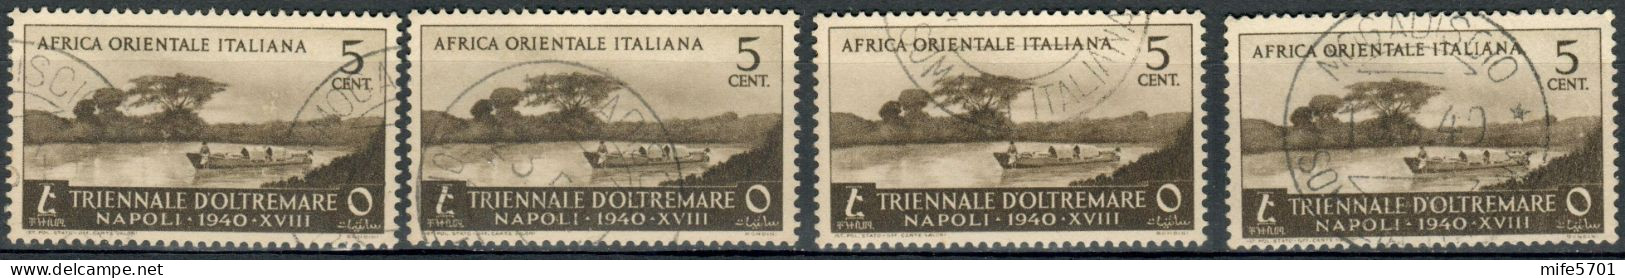 REGNO AFRICA ORIENTALE ITALIANA 1940 A.O.I. 1ª MOSTRA TRIENNALE D'OLTREMARE 4 ESEMPLARI DA C. 5 USATI - SASSONE 27 - Afrique Orientale Italienne